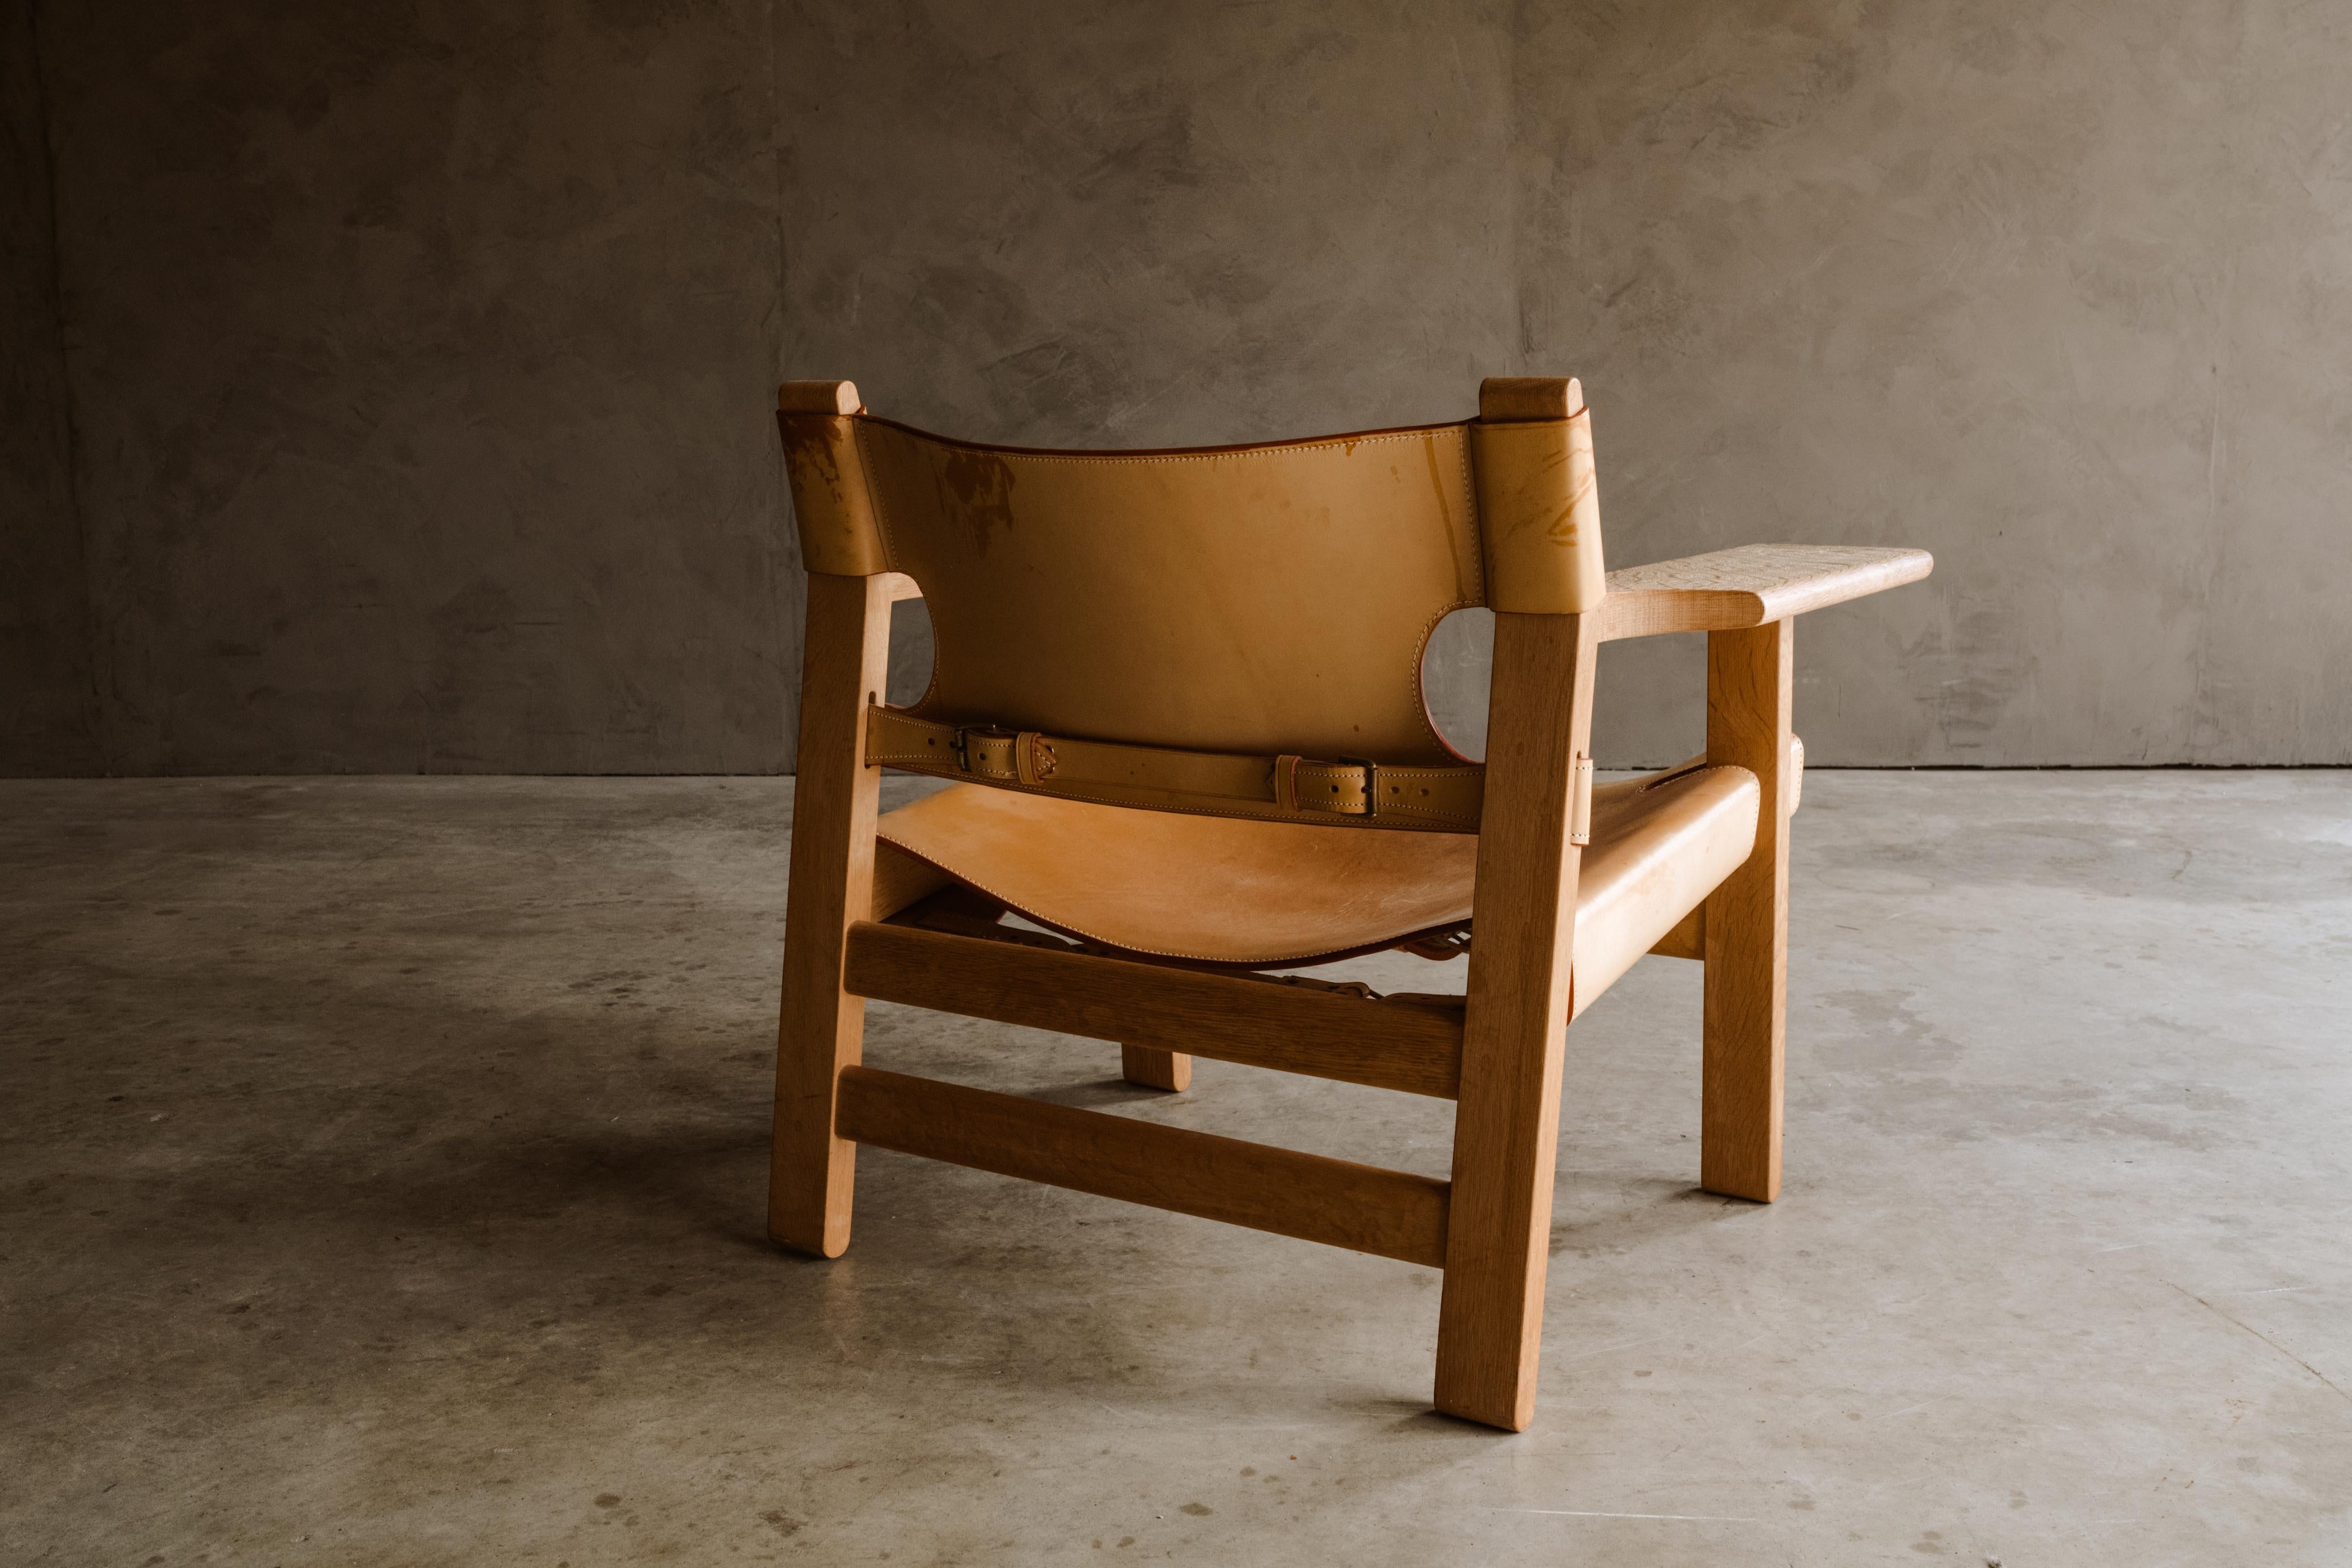 Late 20th Century Vintage Spanish Chair Designed by Børge Mogensen, Denmark 1970s For Sale